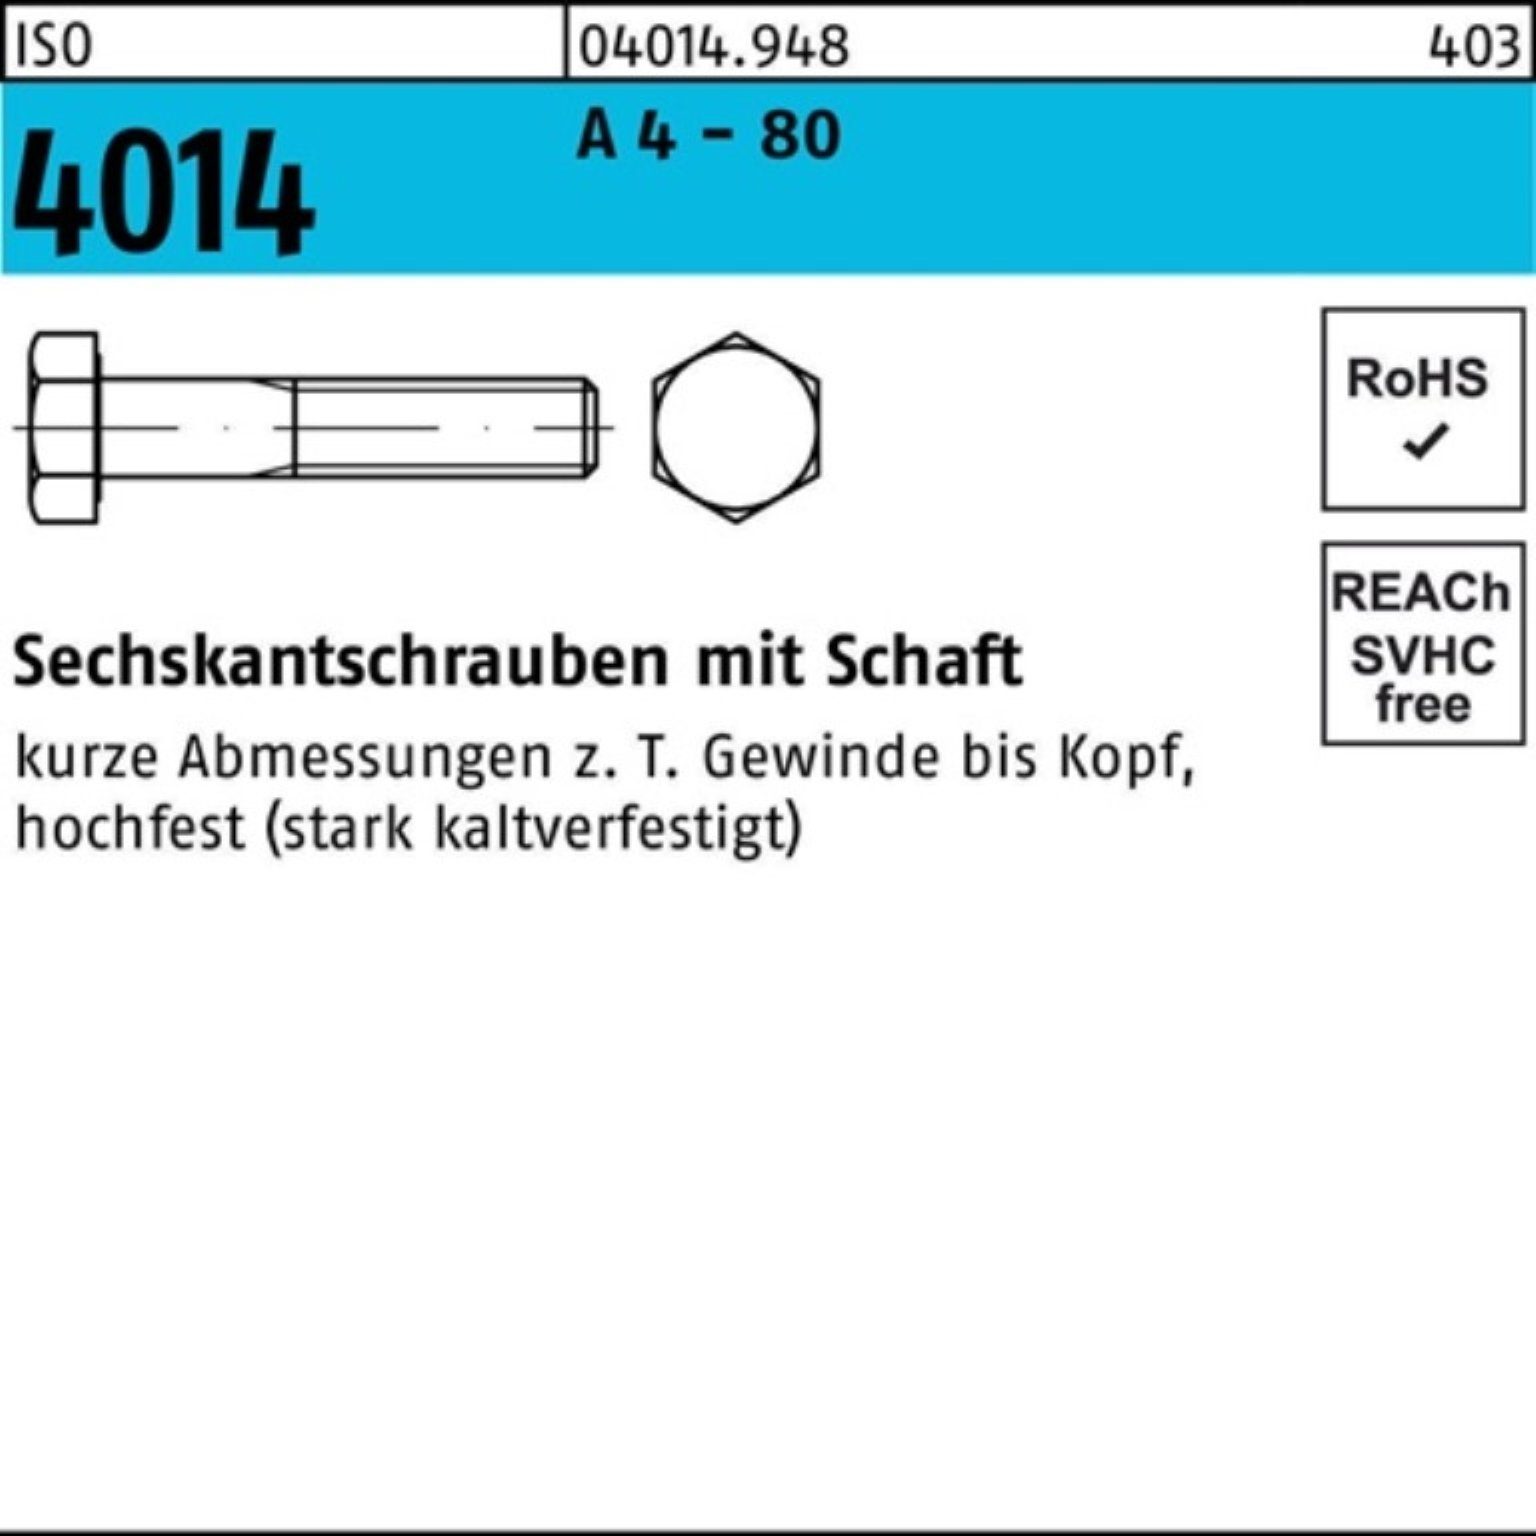 Kostengünstig Bufab Sechskantschraube 100er Pack Schaft 4 100 - 80 A Stü 4014 M14x ISO Sechskantschraube 50